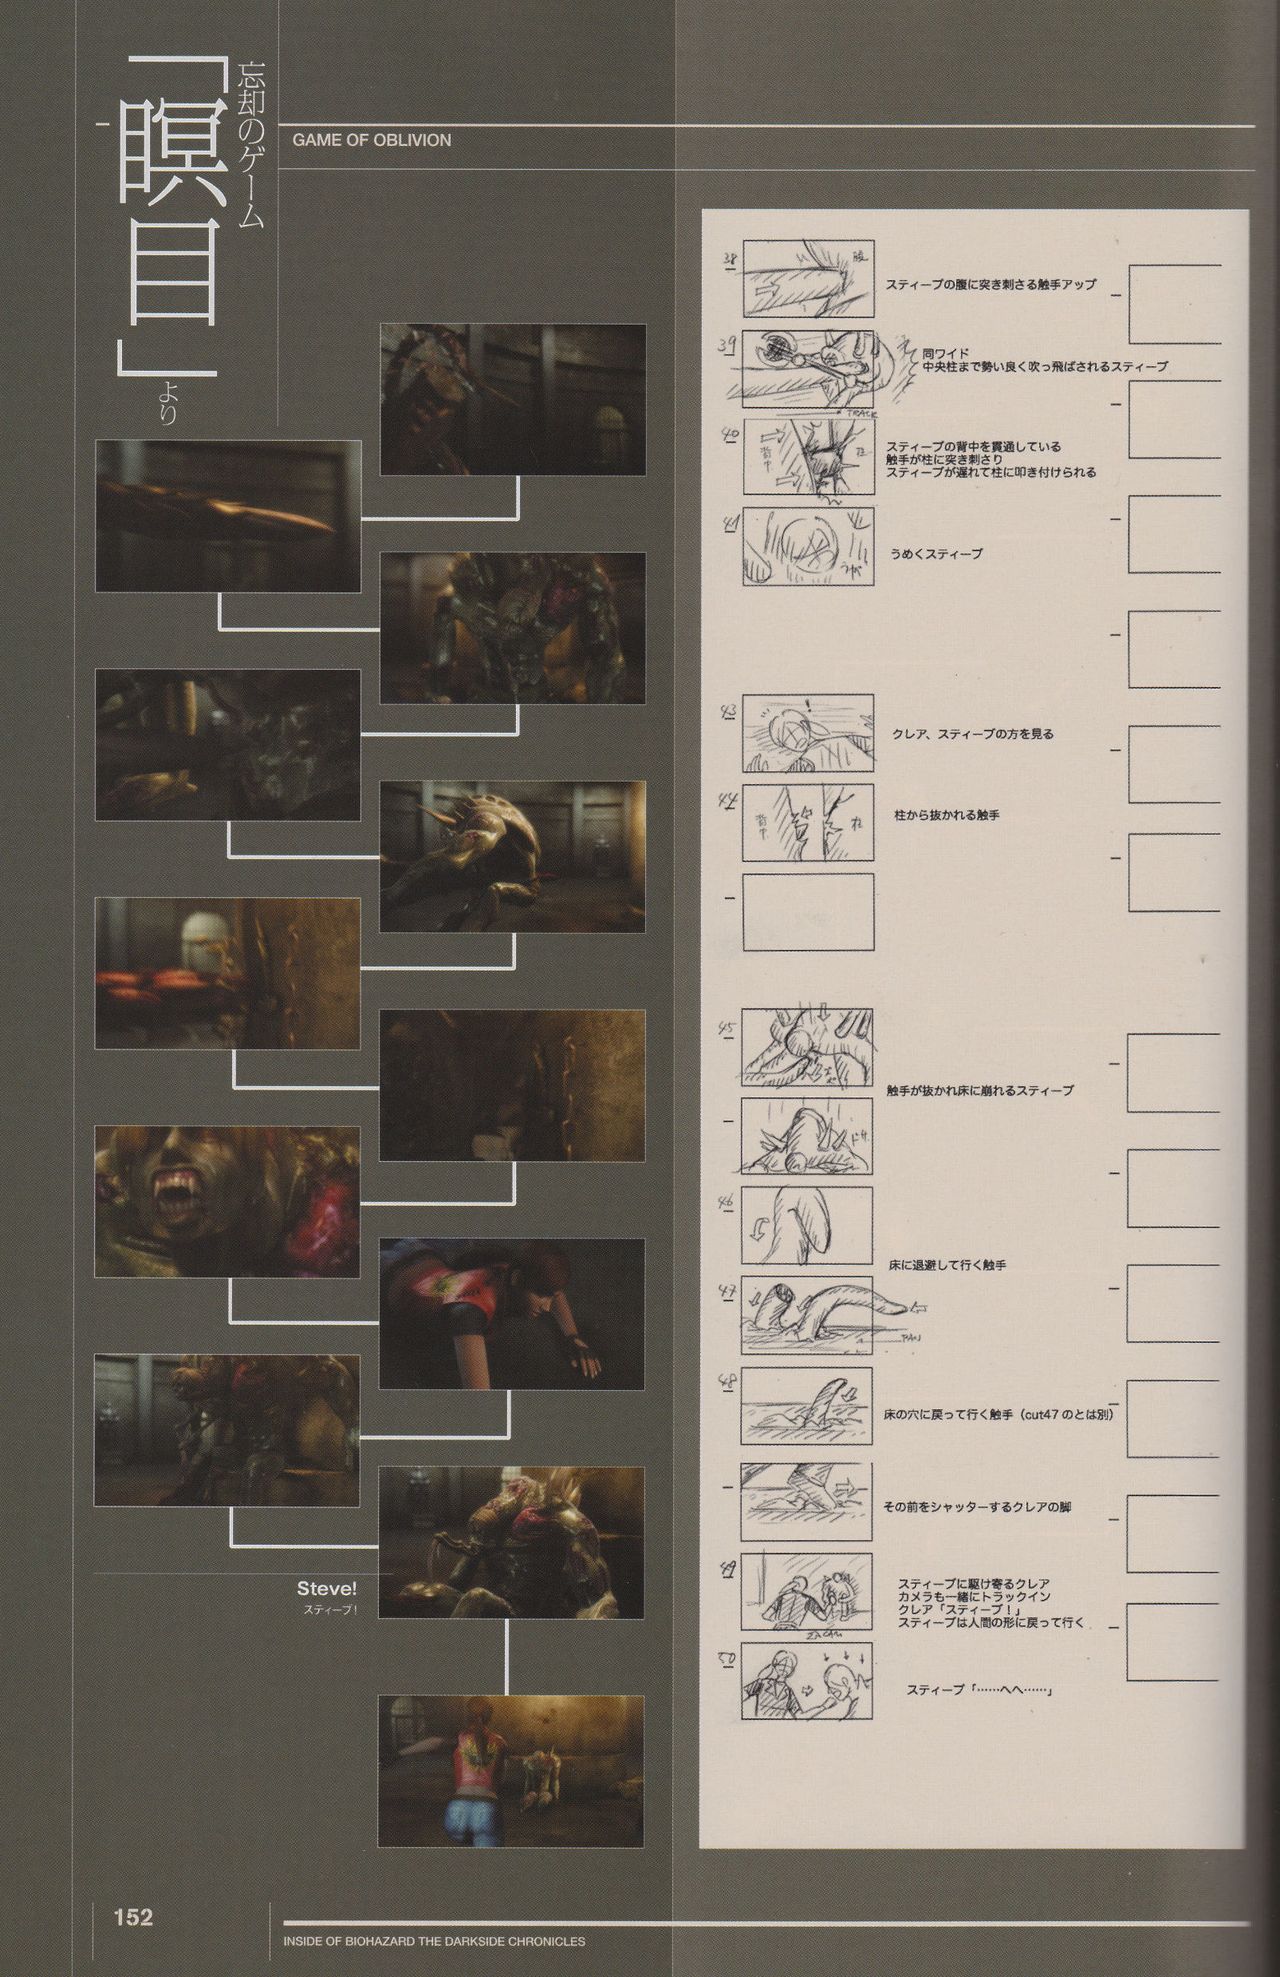 Resident Evil: The Darkside Chronicles Artbook 152